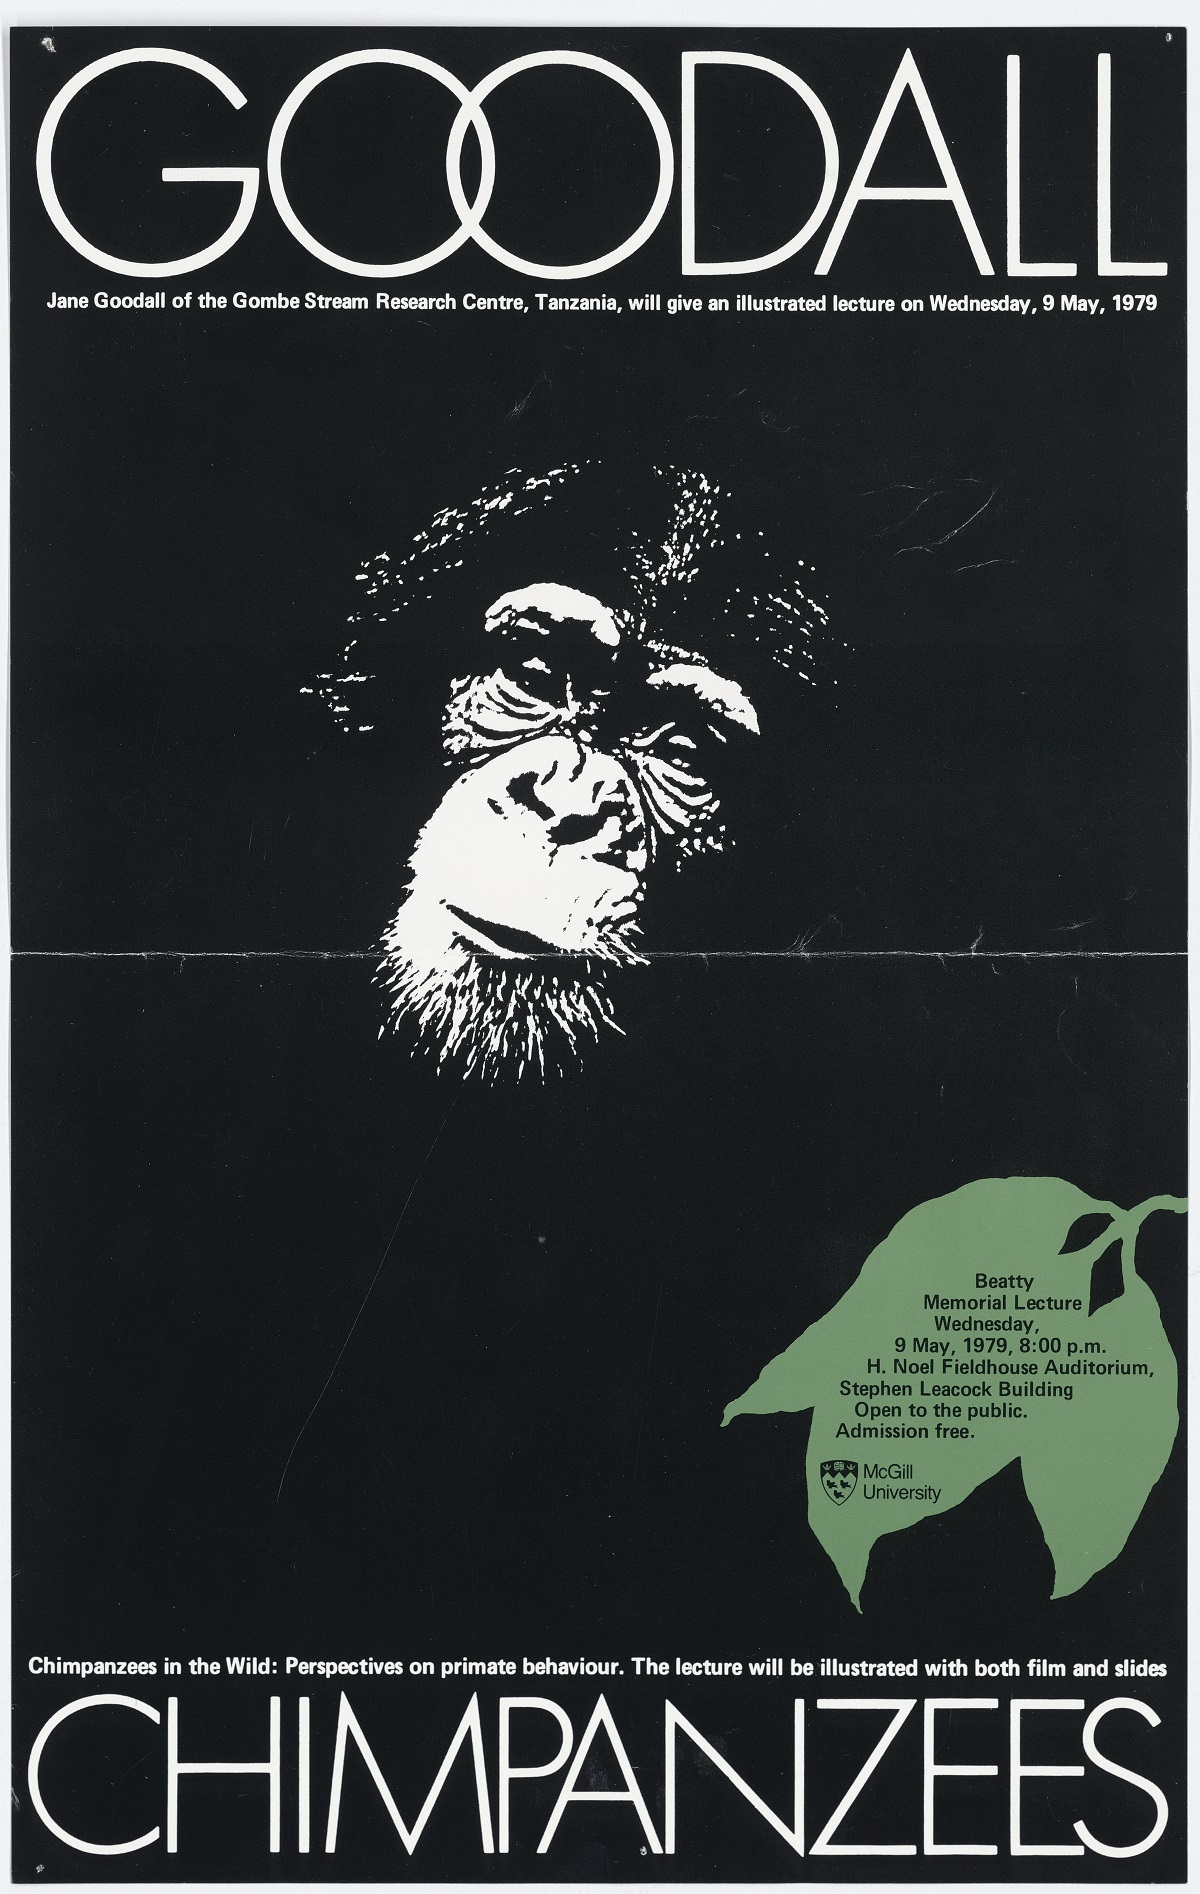 Jane Goodall poster with chimpanzee image